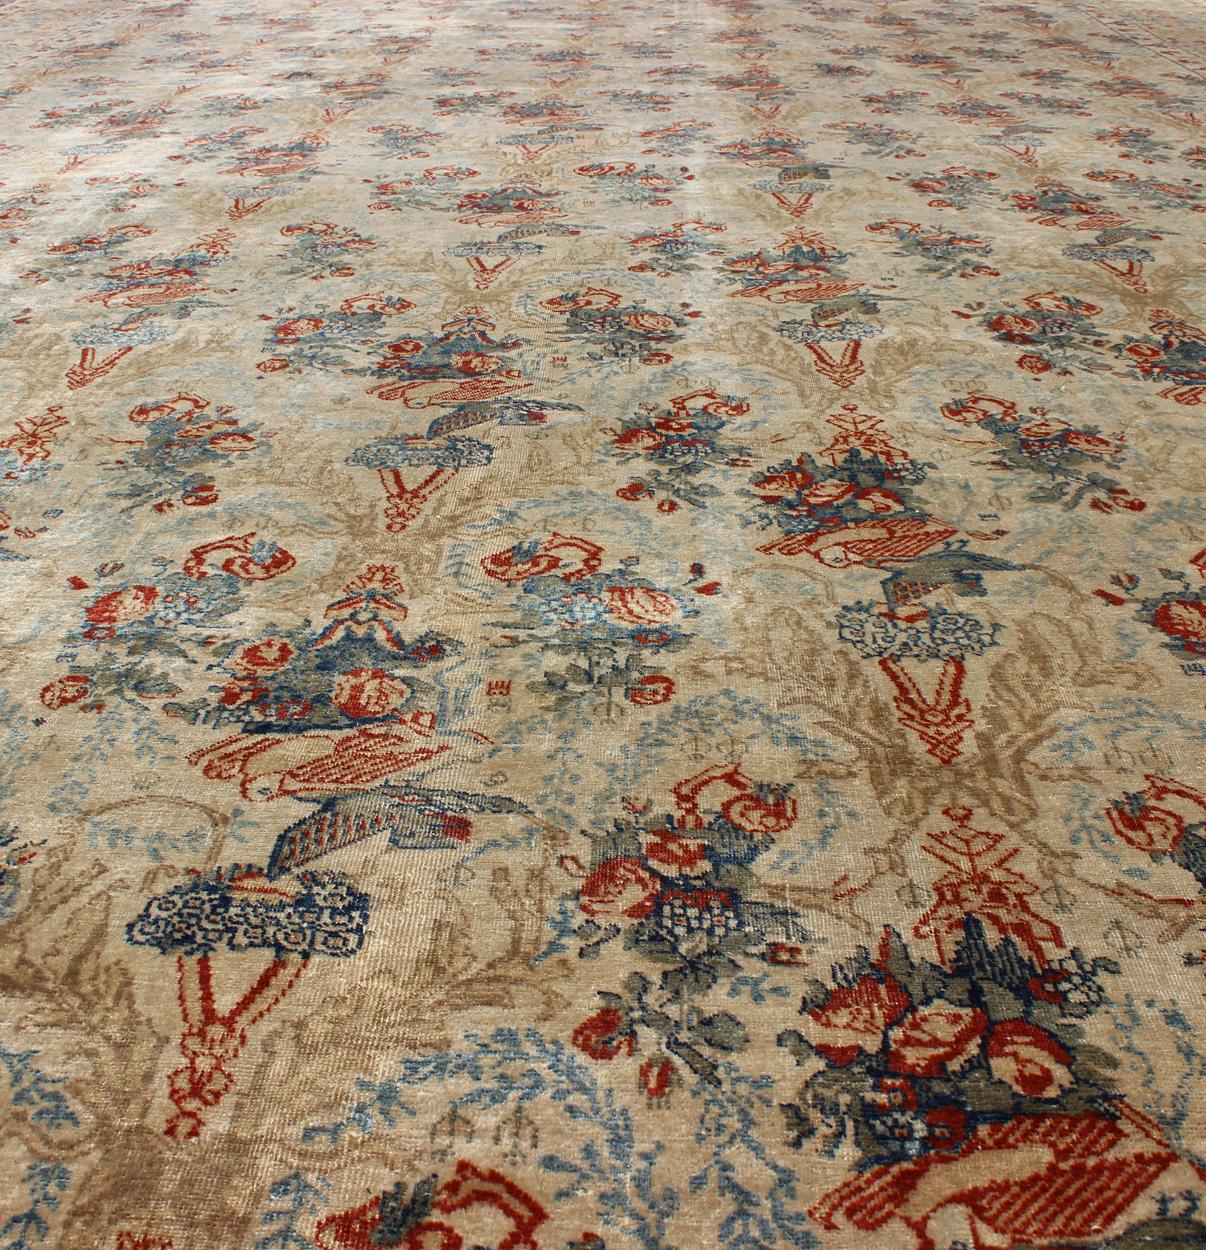 Antique Fine Tabriz Persian Carpet in Ivory Background in Florals & Bird Design For Sale 2